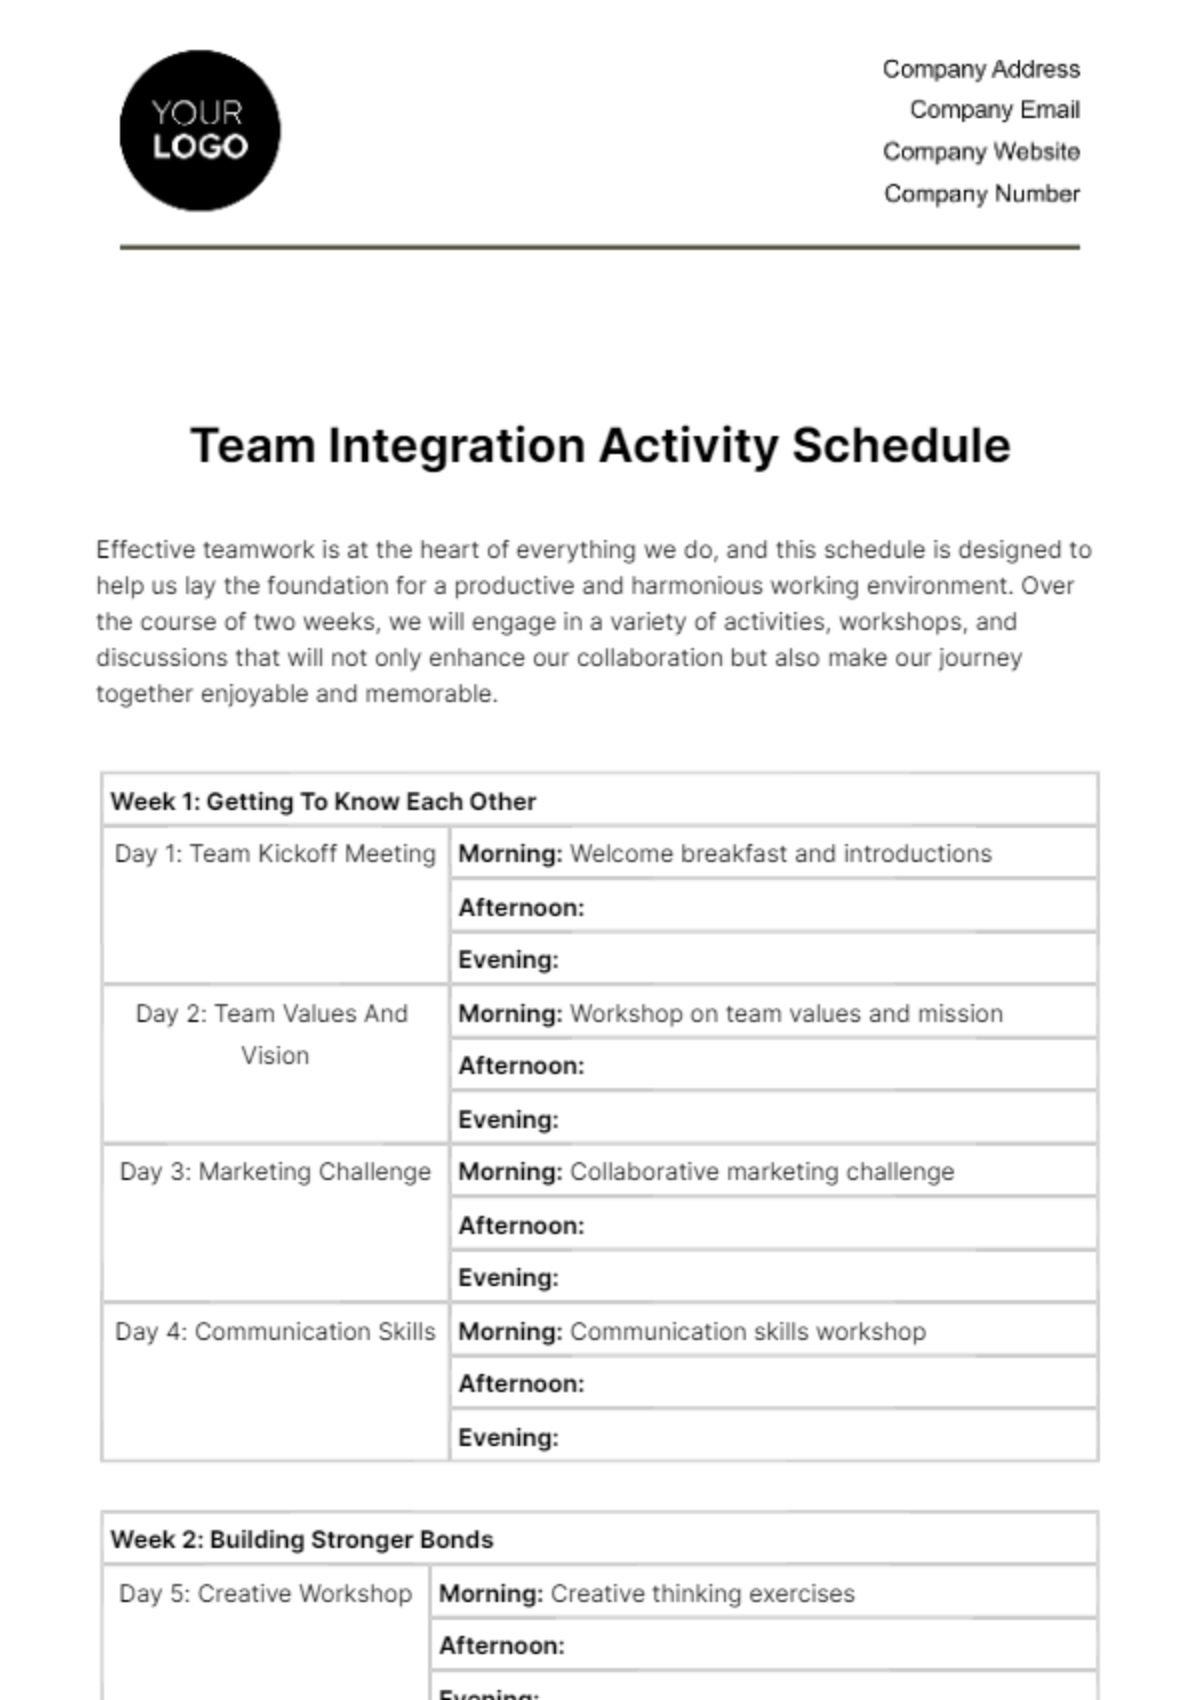 Free Team Integration Activity Schedule HR Template